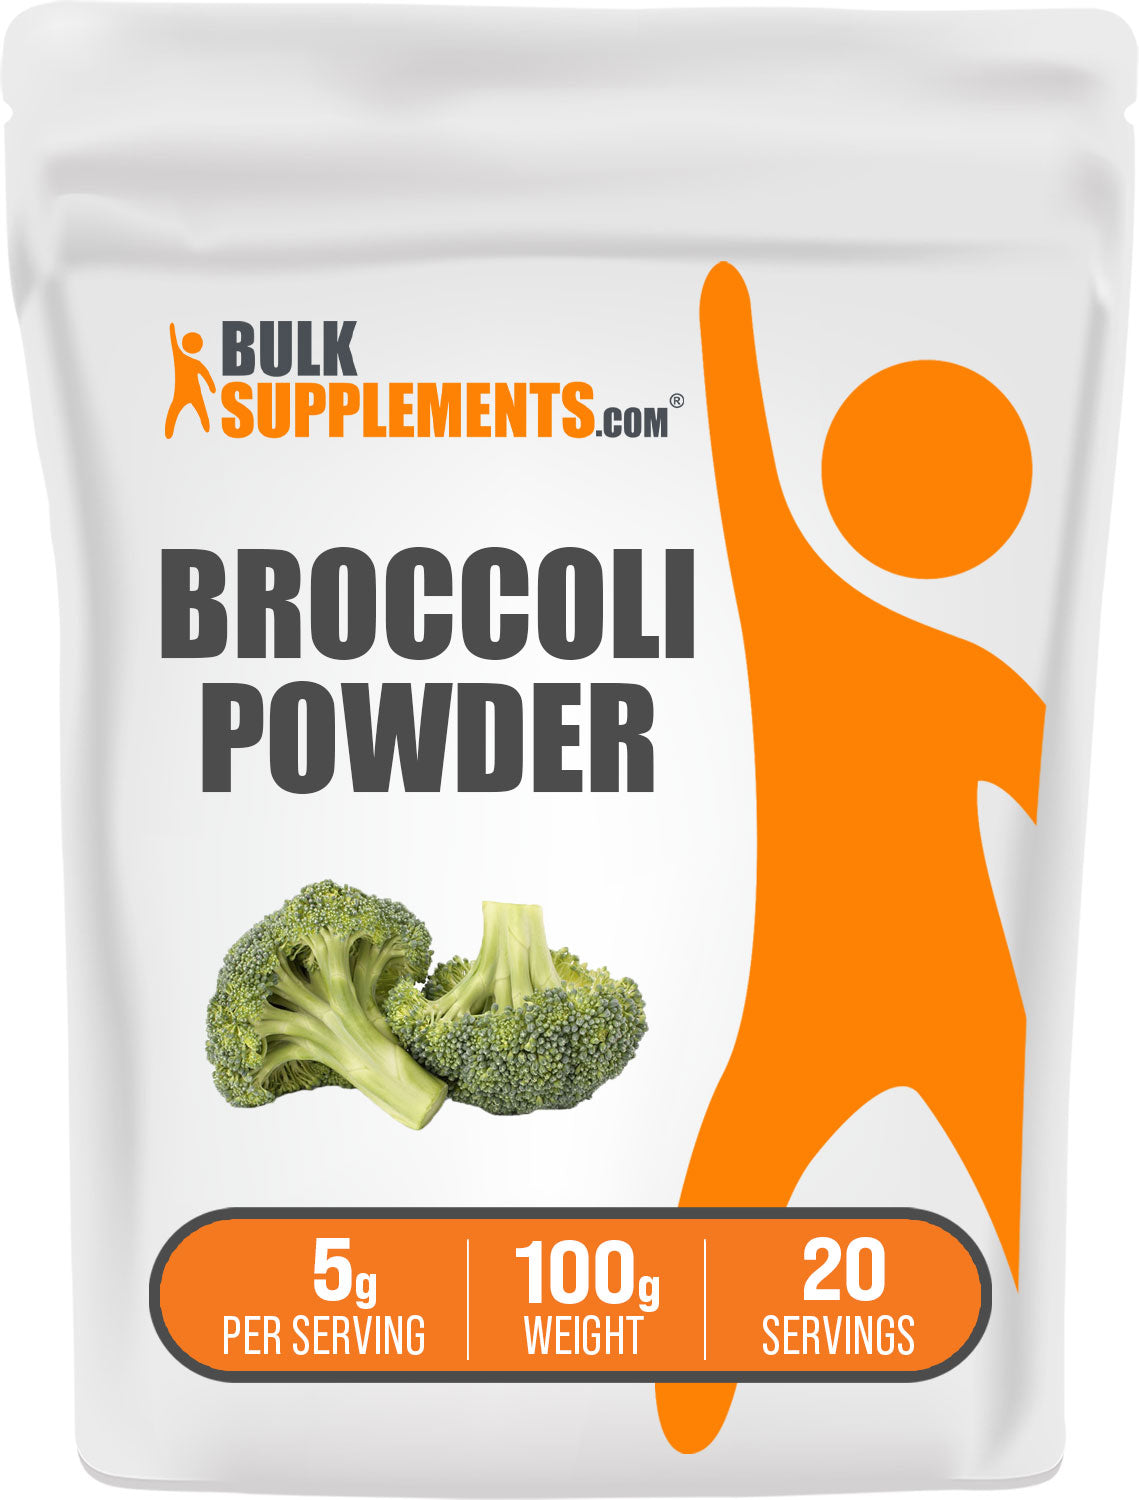 100g of broccoli powder